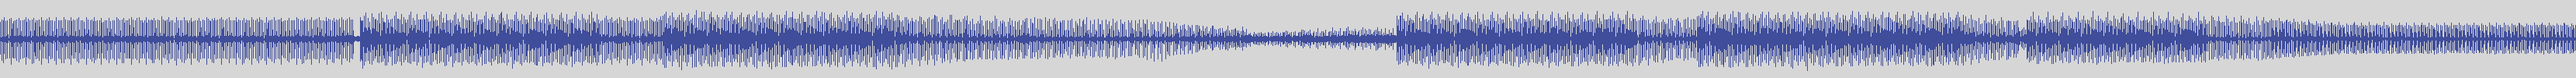 nf_boyz_records [NFY089] Fernandez Alfonso Nunez - Timbal Caliente [Original Mix] audio wave form